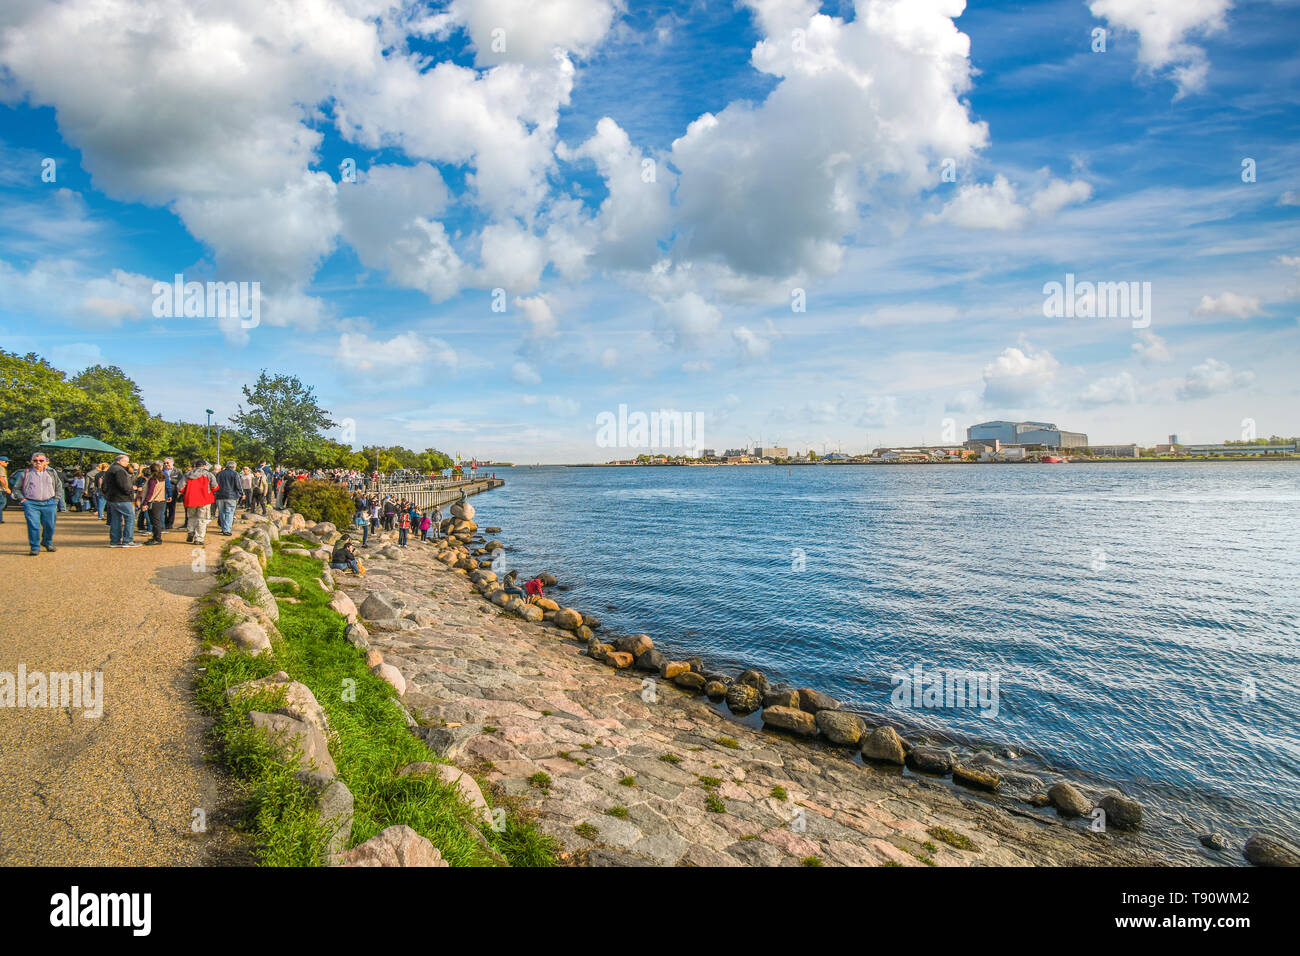 Tourists on holiday visit the Little Mermaid statue on the Langelinie promenade in Copenhagen, Denmark Stock Photo